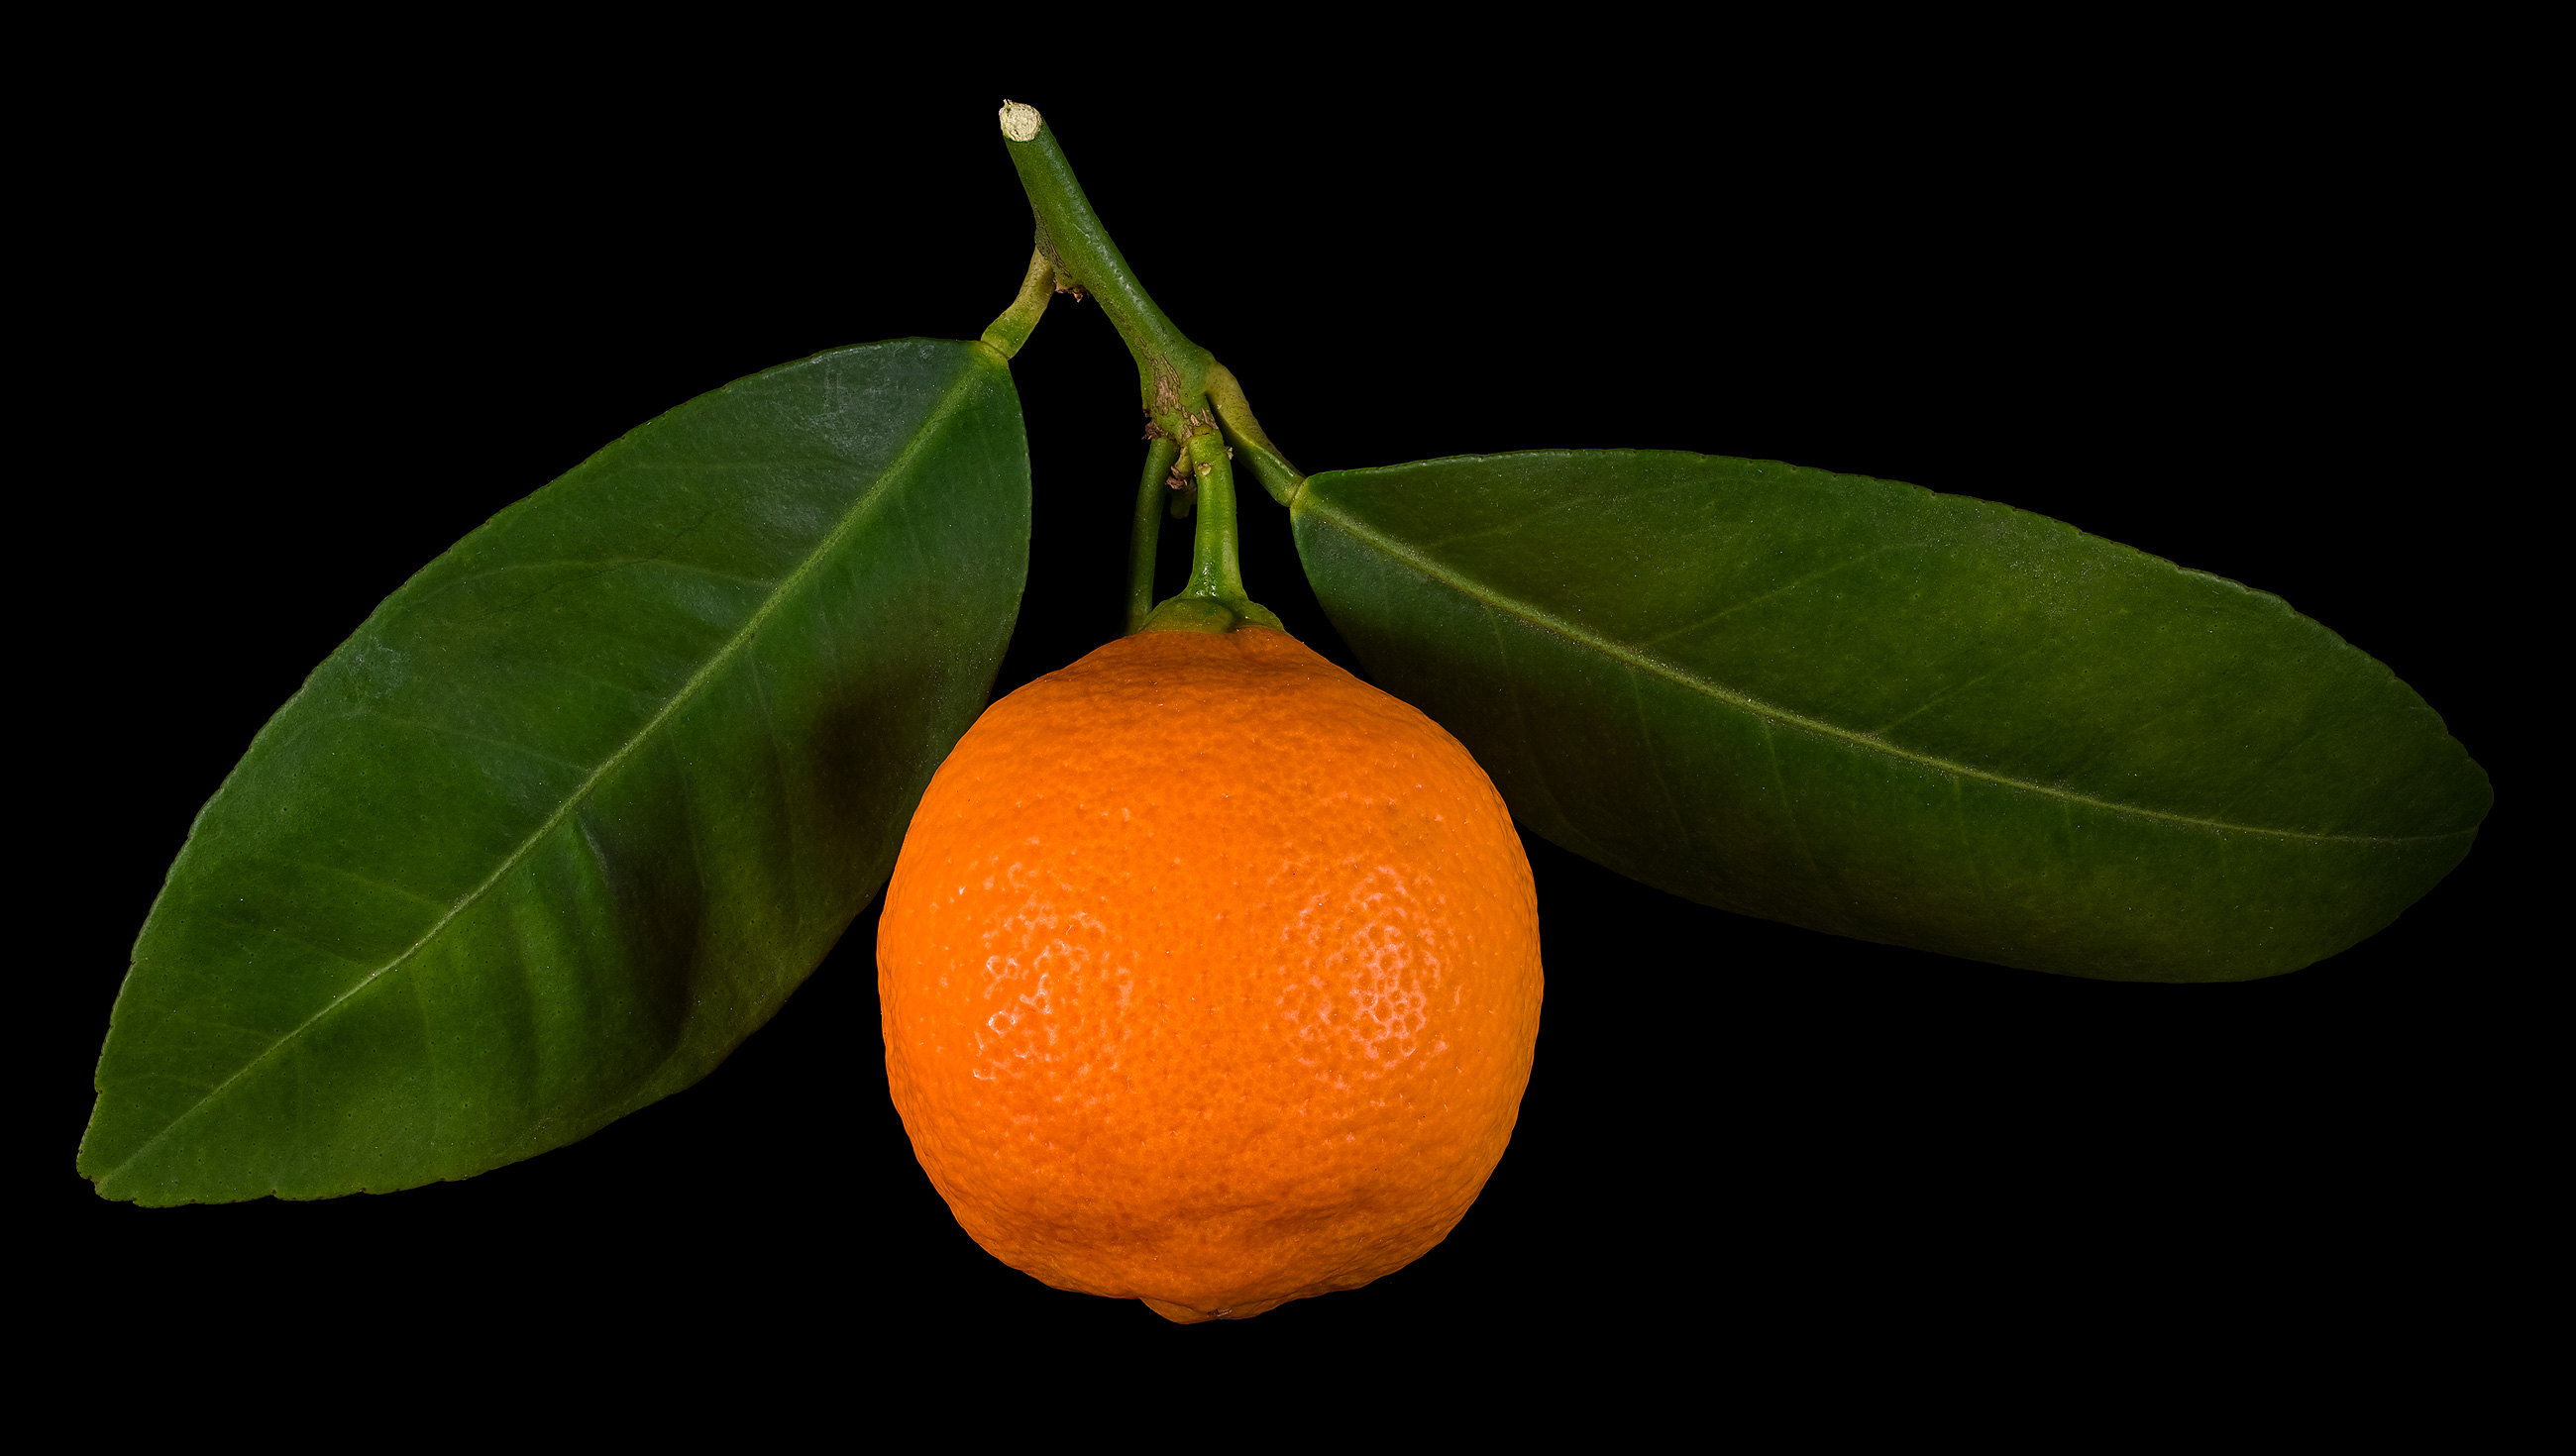 Santa Barbara key lime: Citrus × aurantifolia ‘Santa Barbara’